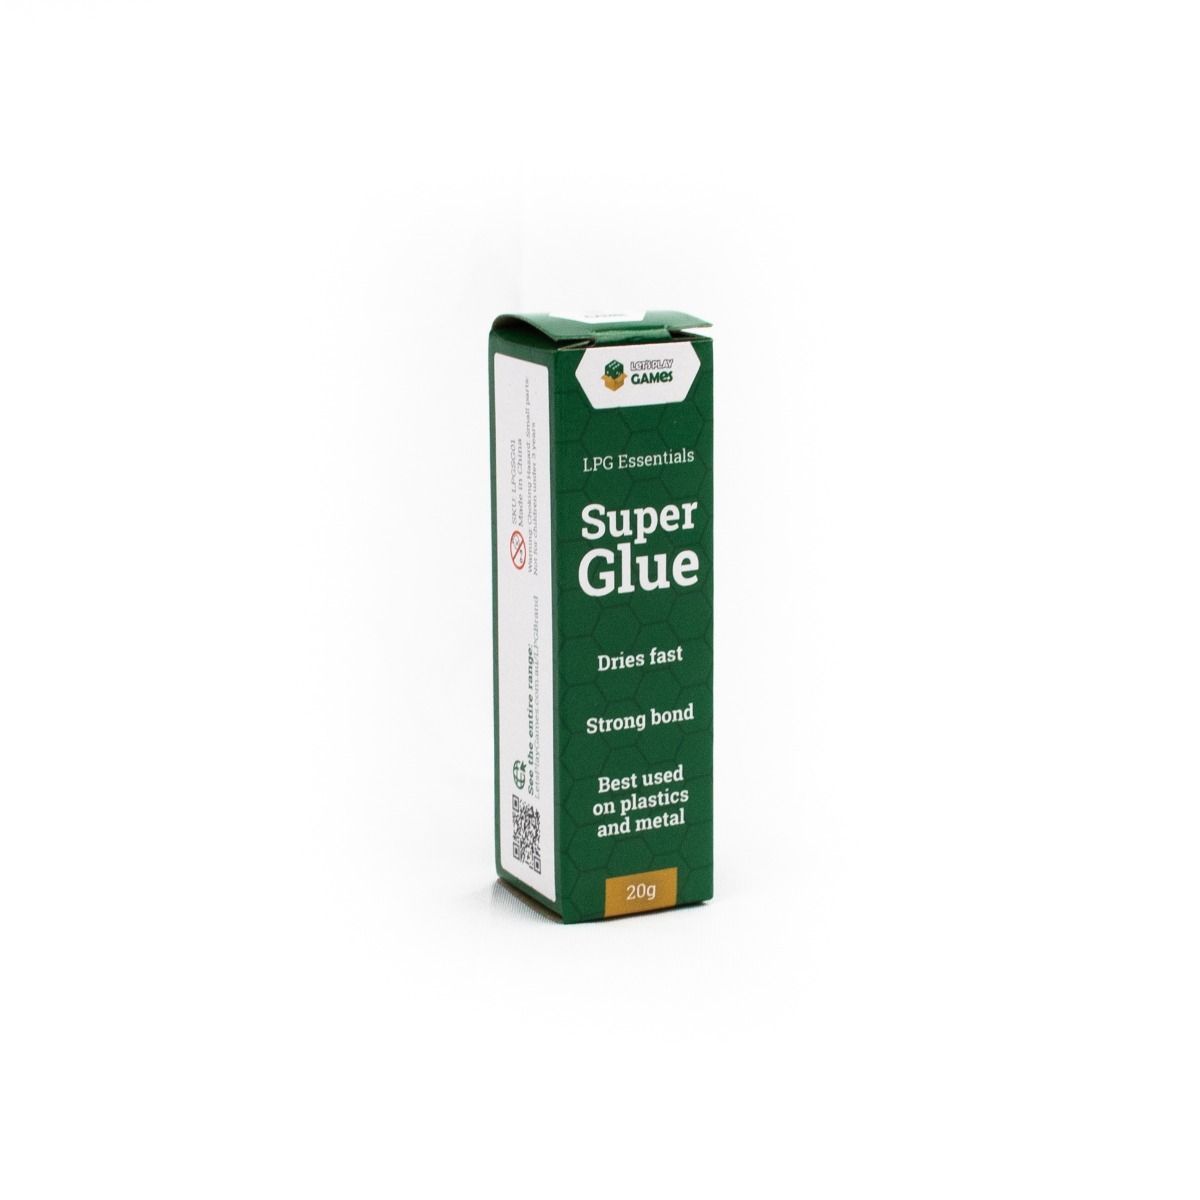 Super Glue 20g (Lets Play Games)